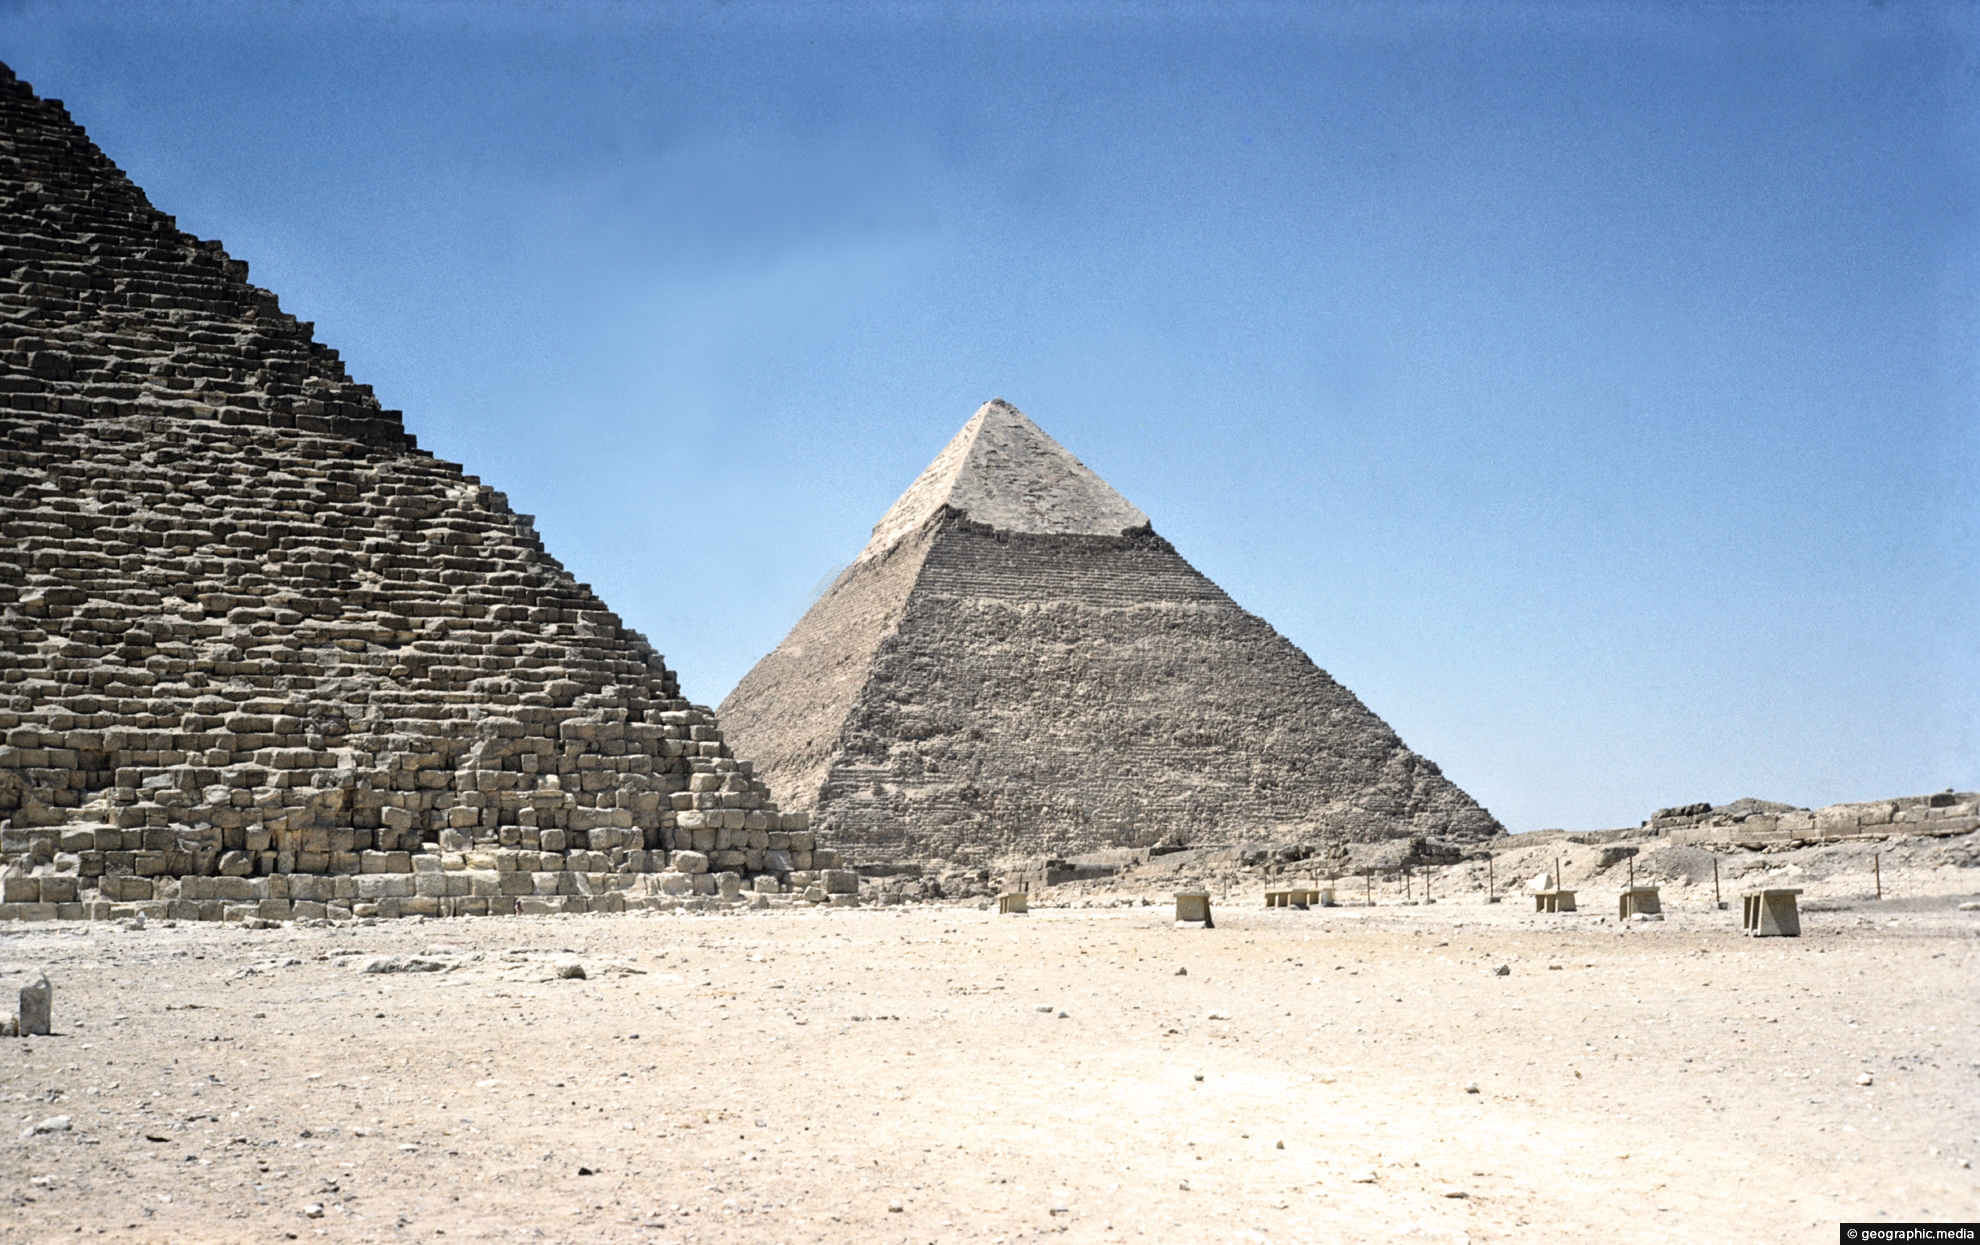 Great Pyramid of Giza & Pyramid of Khafre